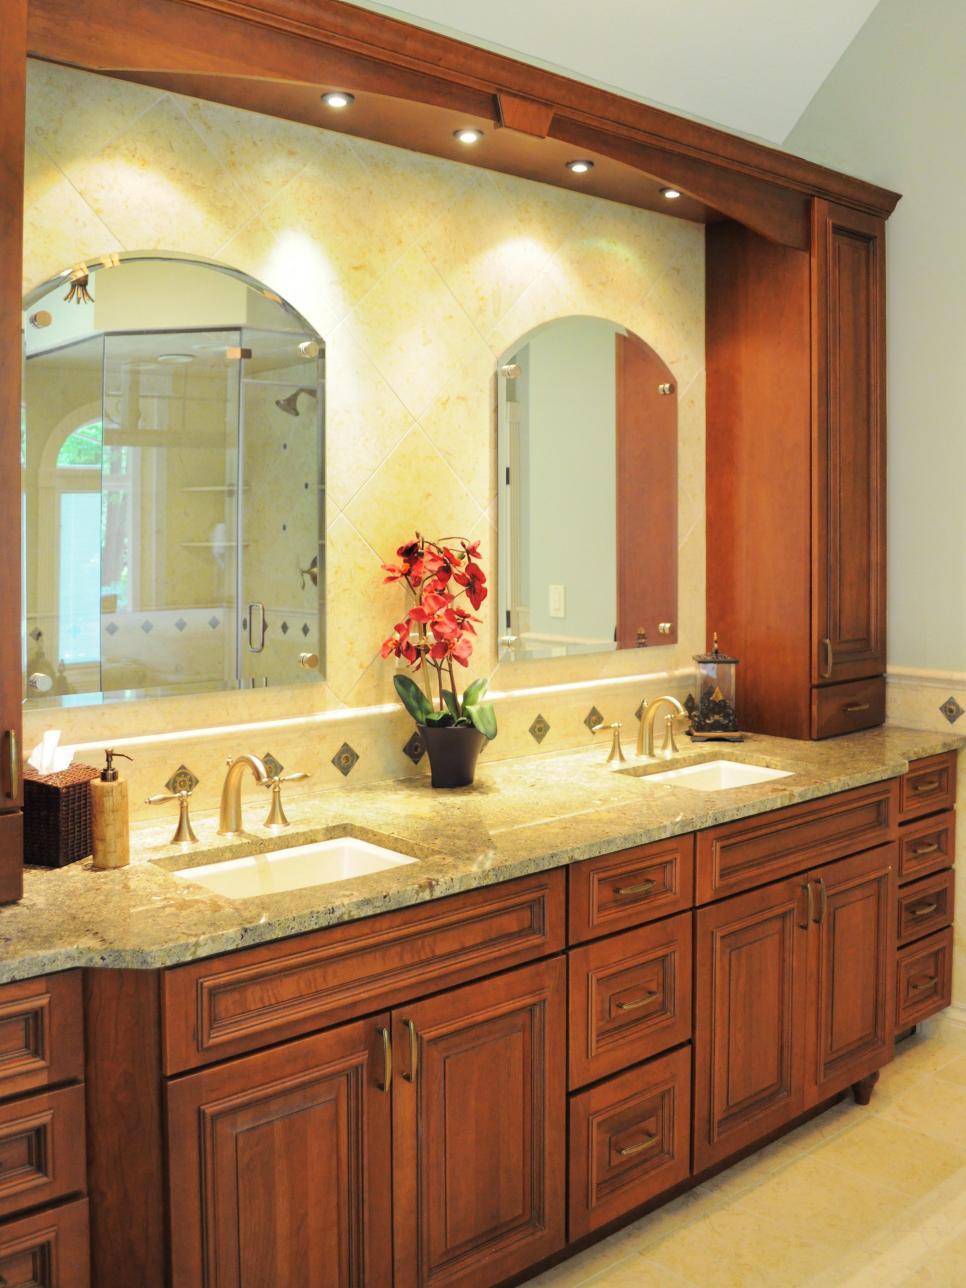 Traditional Bathroom With Double Wooden Vanities and Tile Backsplash